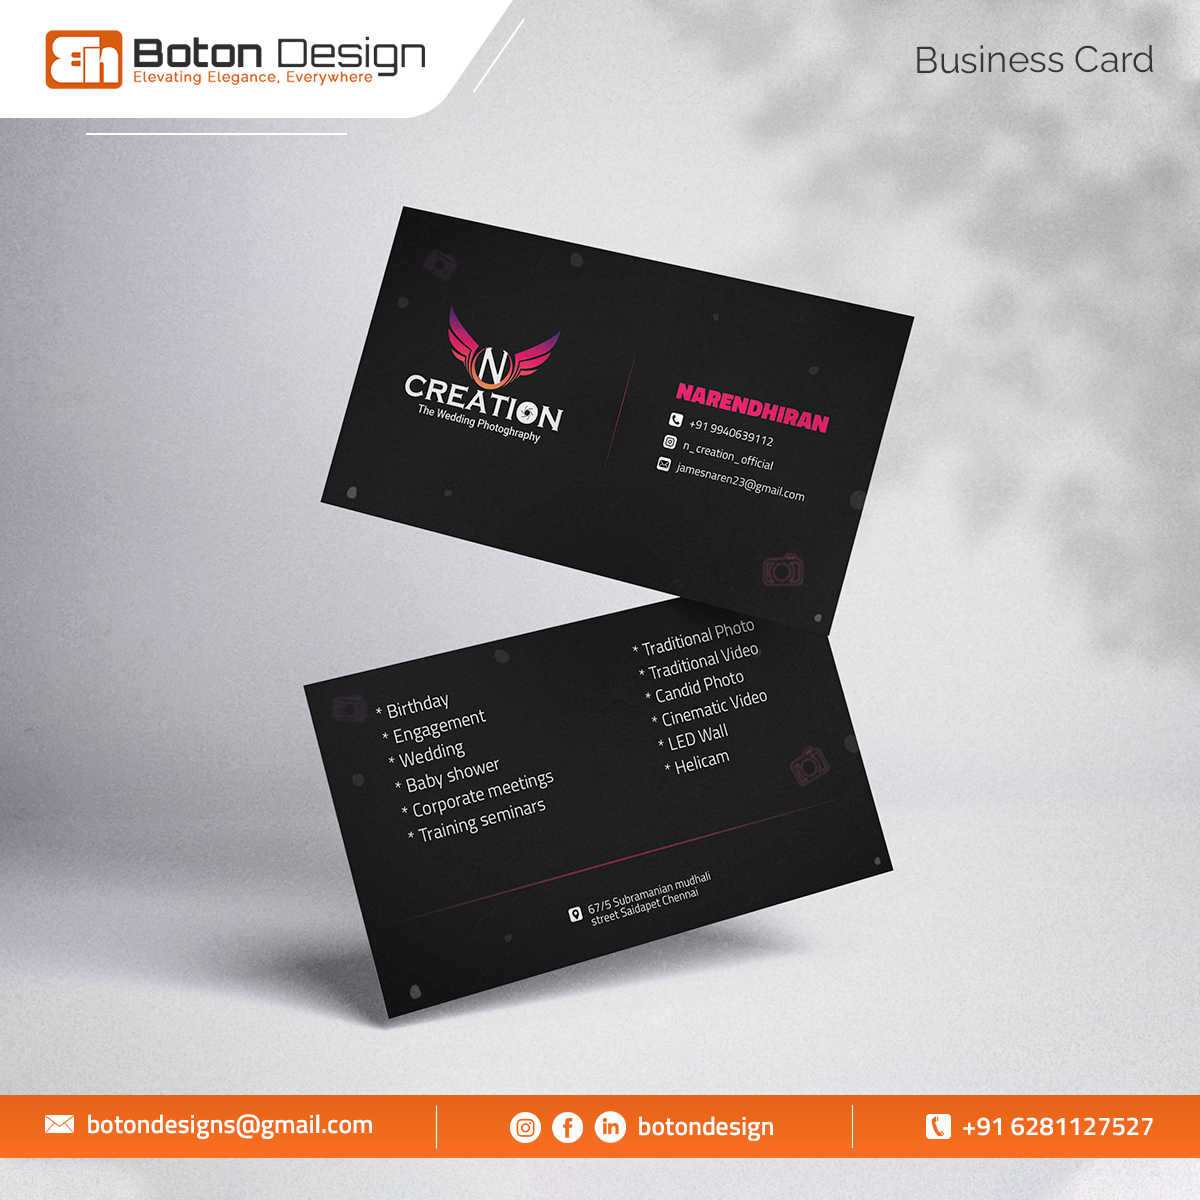 'Elegantly crafted by Boton Designs, this business card combines modern aesthetics with functional sophistication. 
#BotonDesigns #BusinessCard #Design #GraphicDesign #Branding #CreativeDesign #MinimalistDesign #LuxuryDesign #ProfessionalDesign #ElegantDesign #ModernDesign